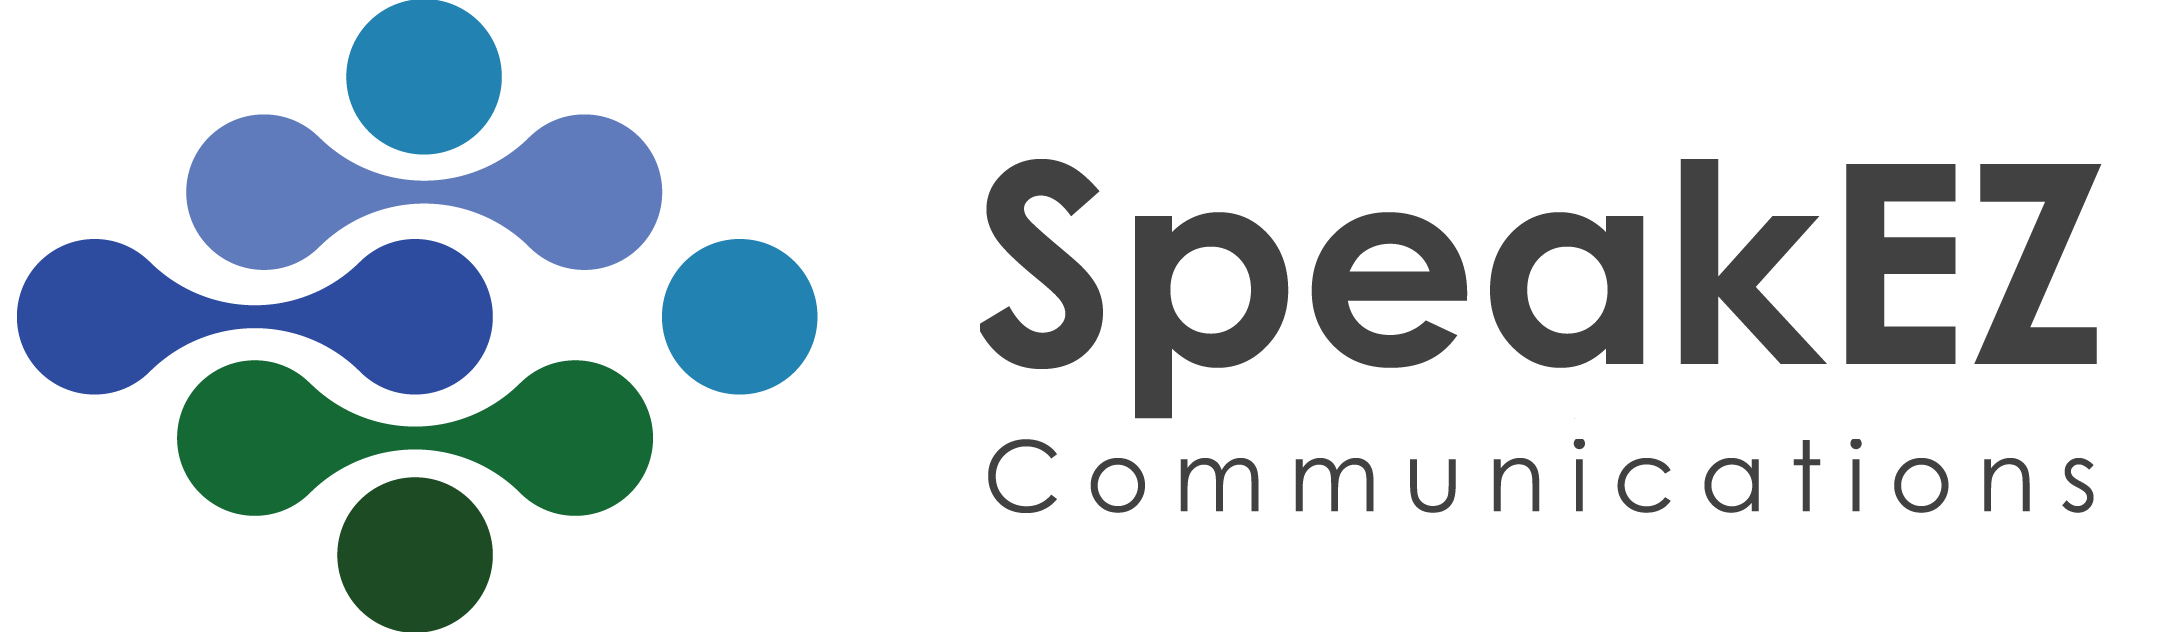 SpeakEZ-CommunicationsPNG_Logo